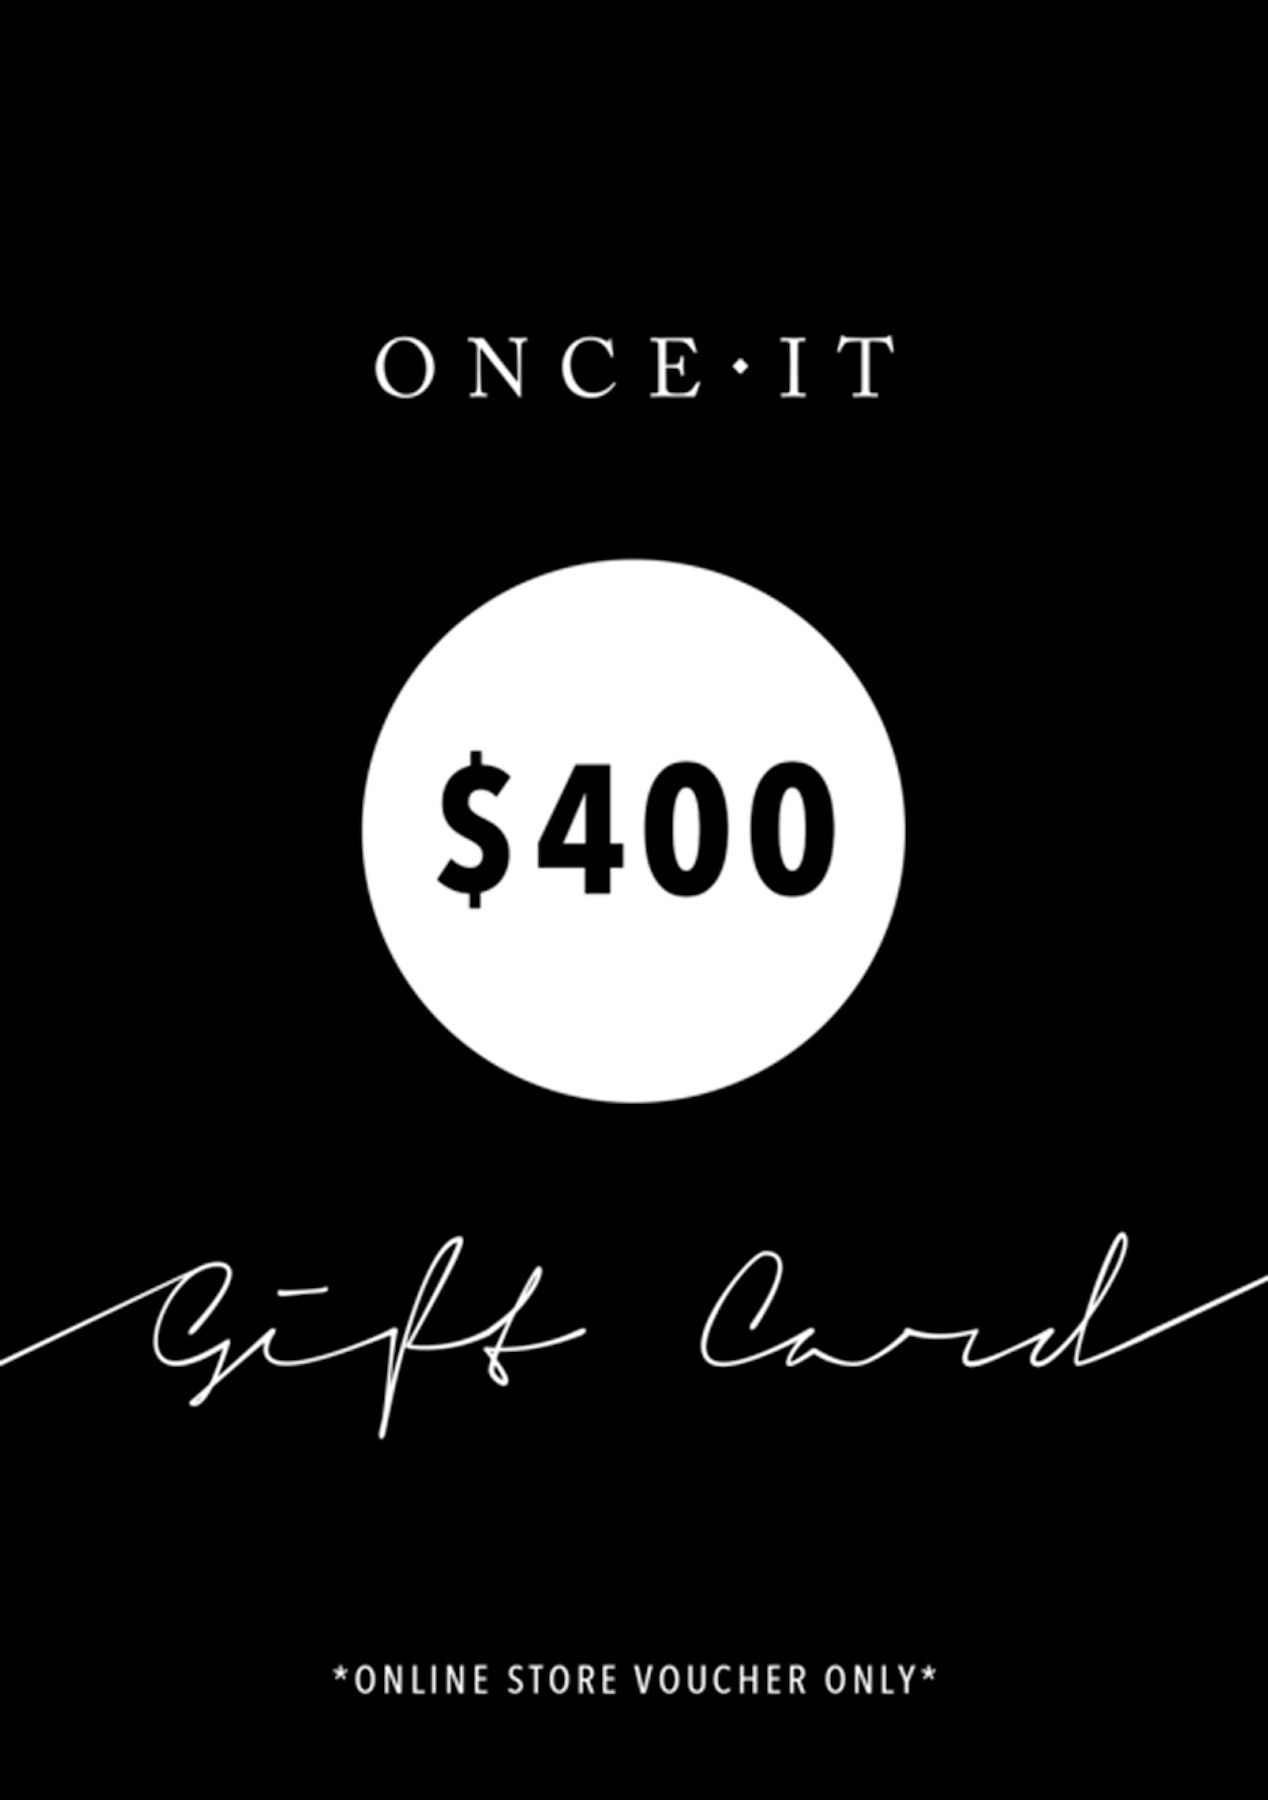 Onceit $400 Digital Gift Card